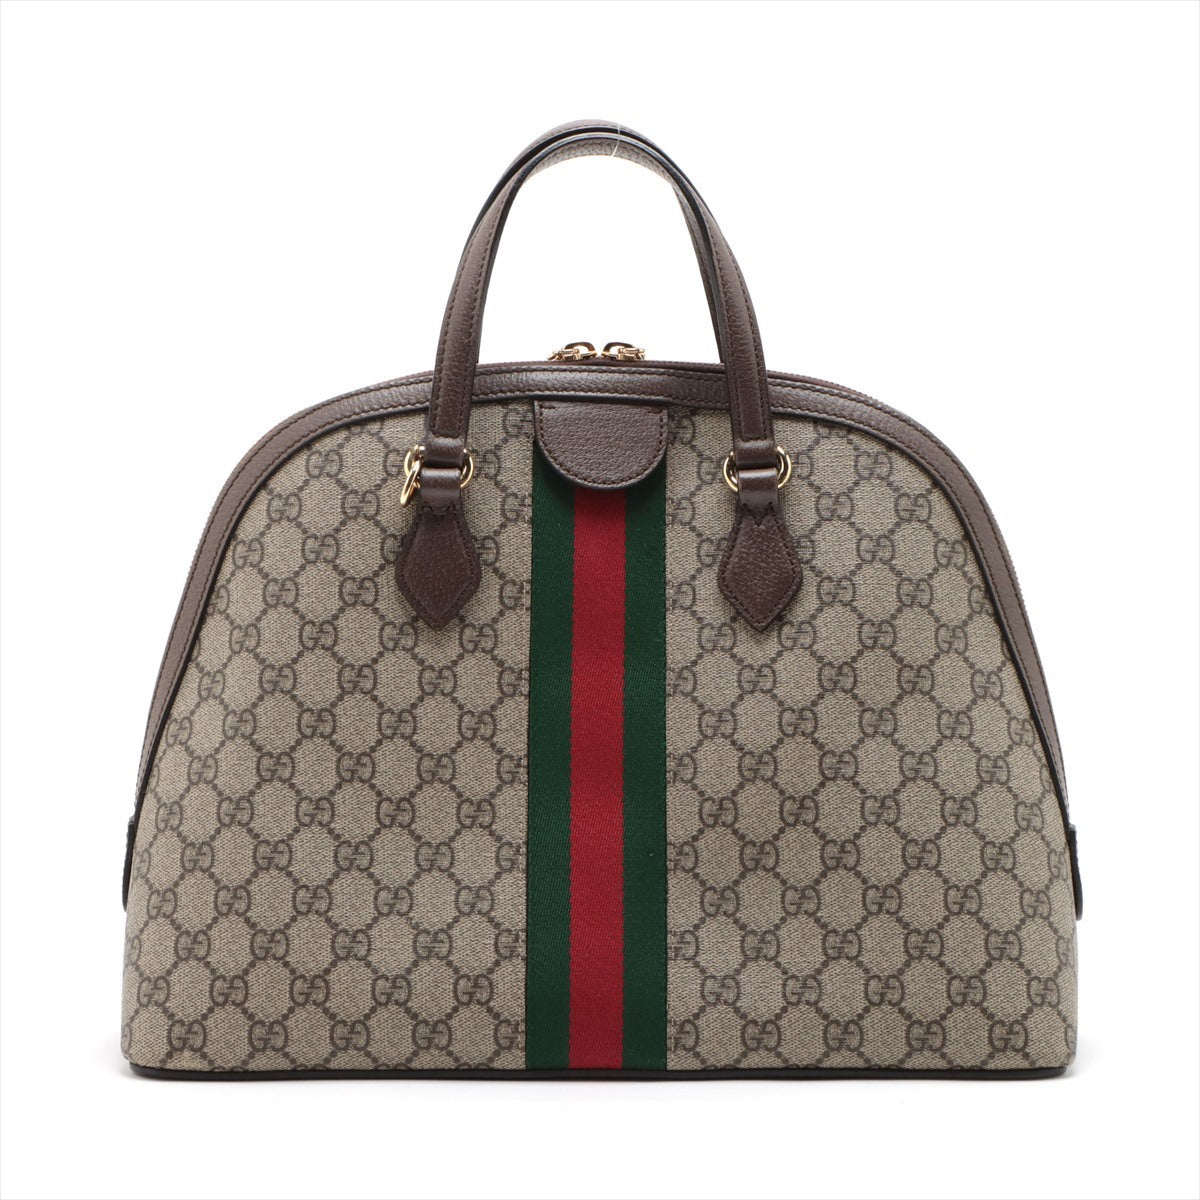 Gucci GG Supreme PVC & leather 2way handbag Beige×Brown 524533